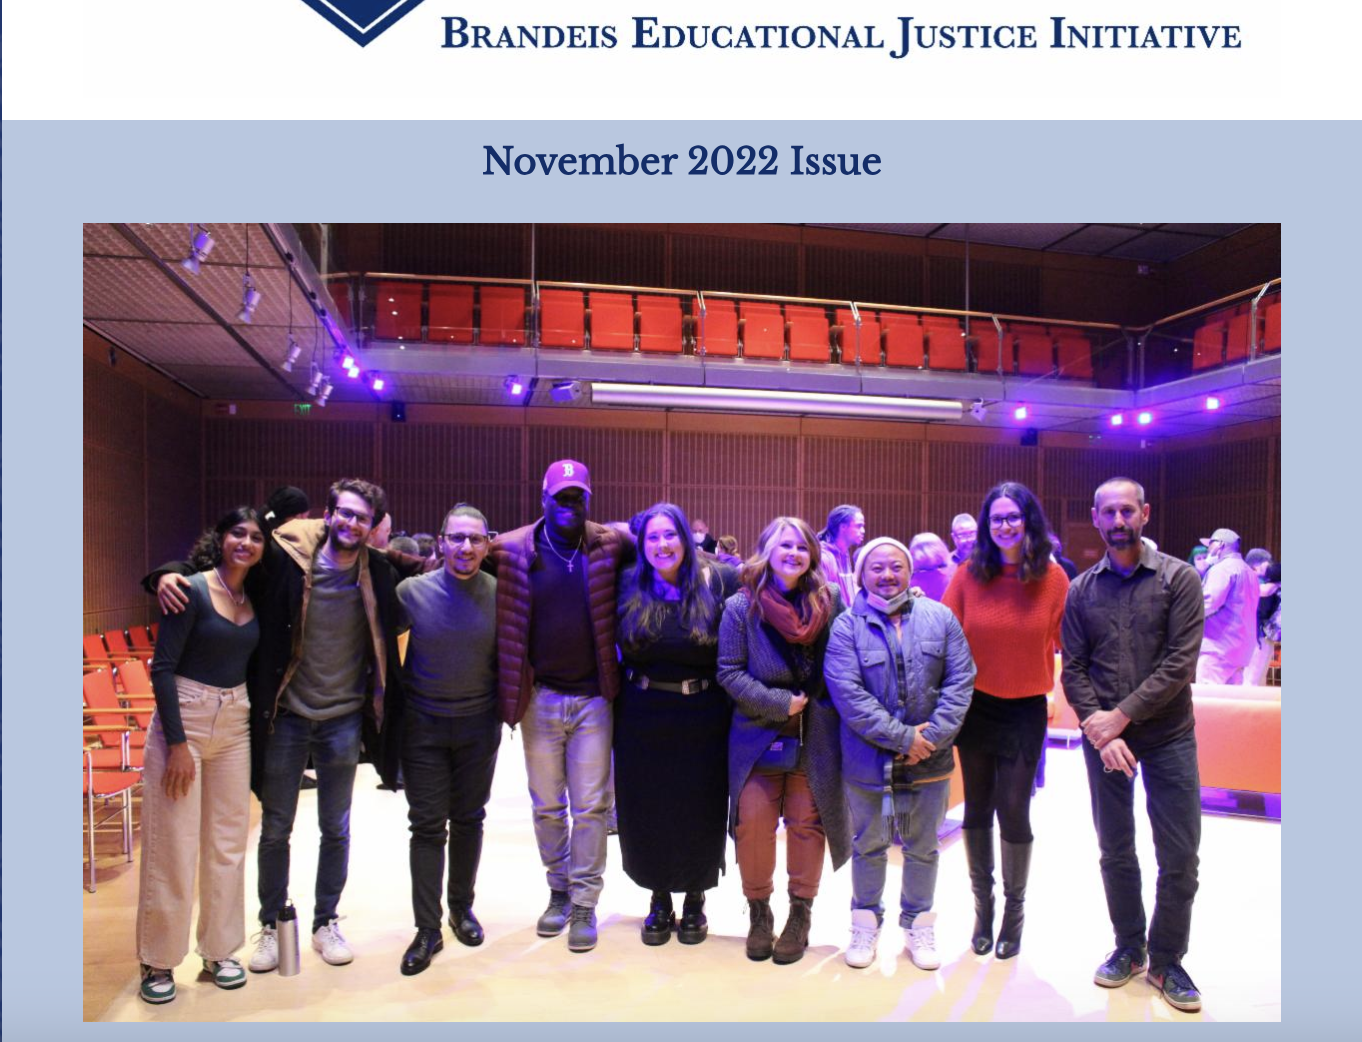 A screenshot from BEJI's November 2022 newsletter cover, showing Partakers Empowerment Program team.